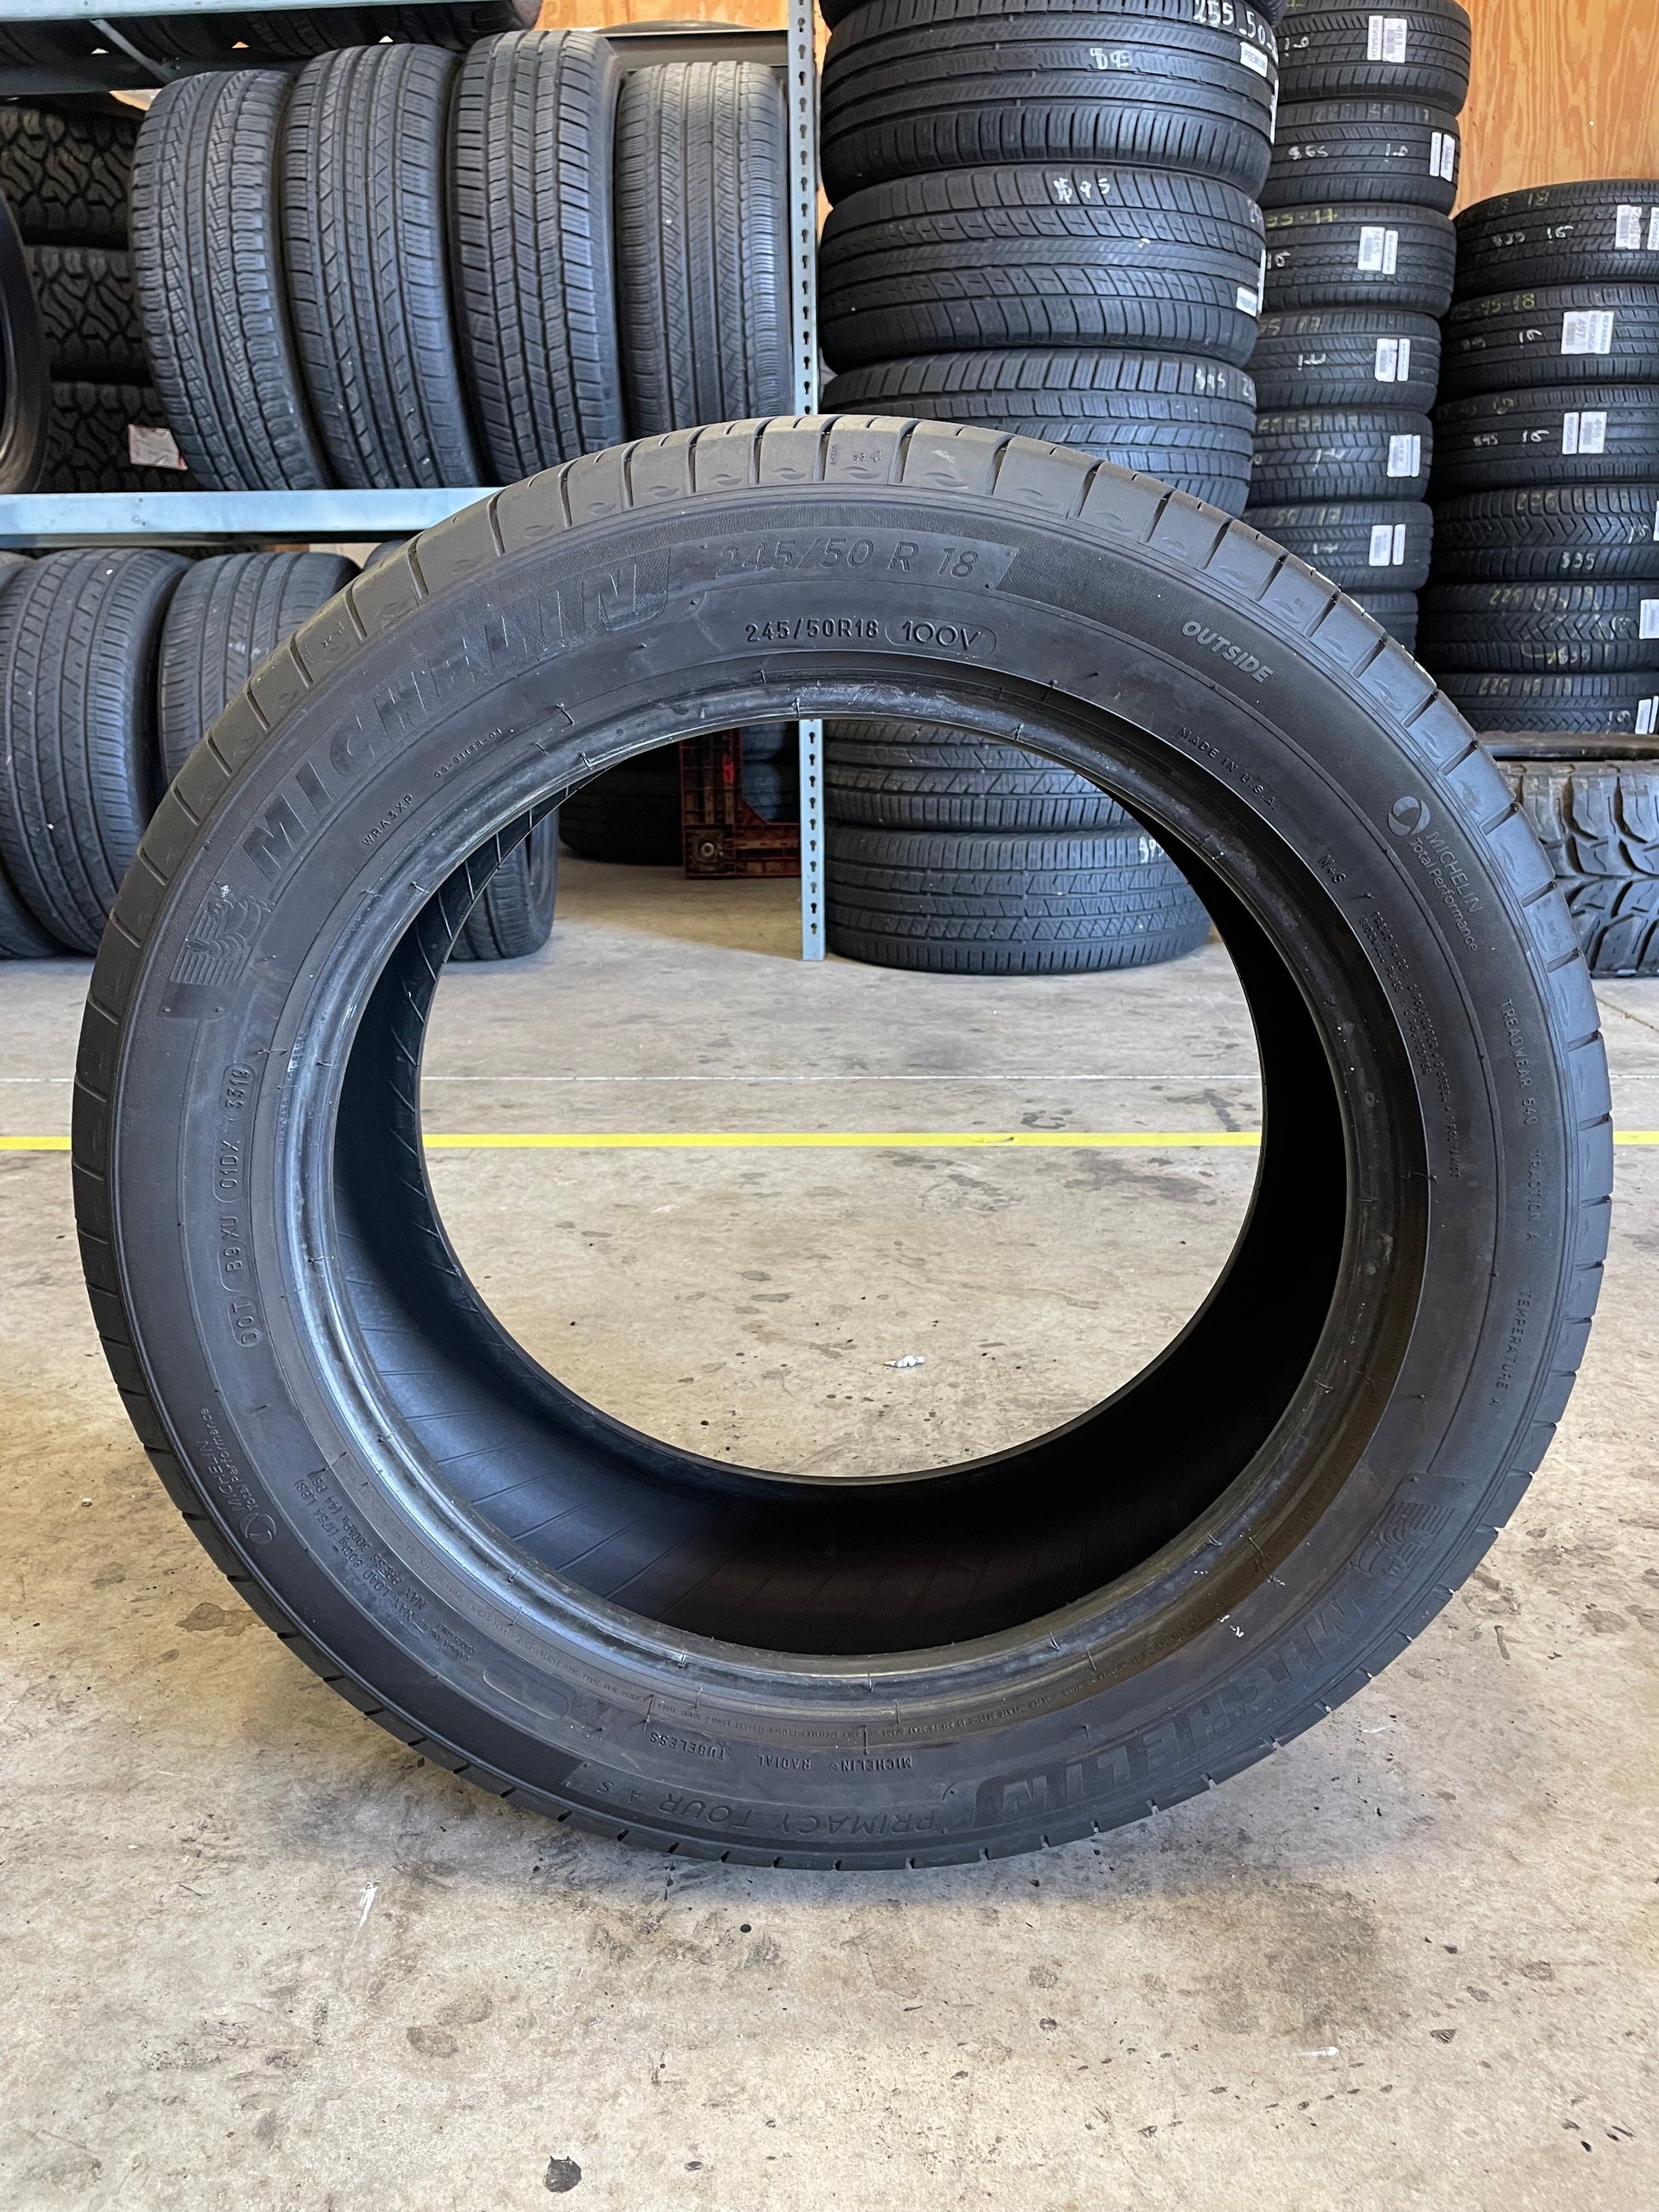 SINGLE 245/50R18 Michelin Primacy Tour A/S 100 V SL - Used Tires